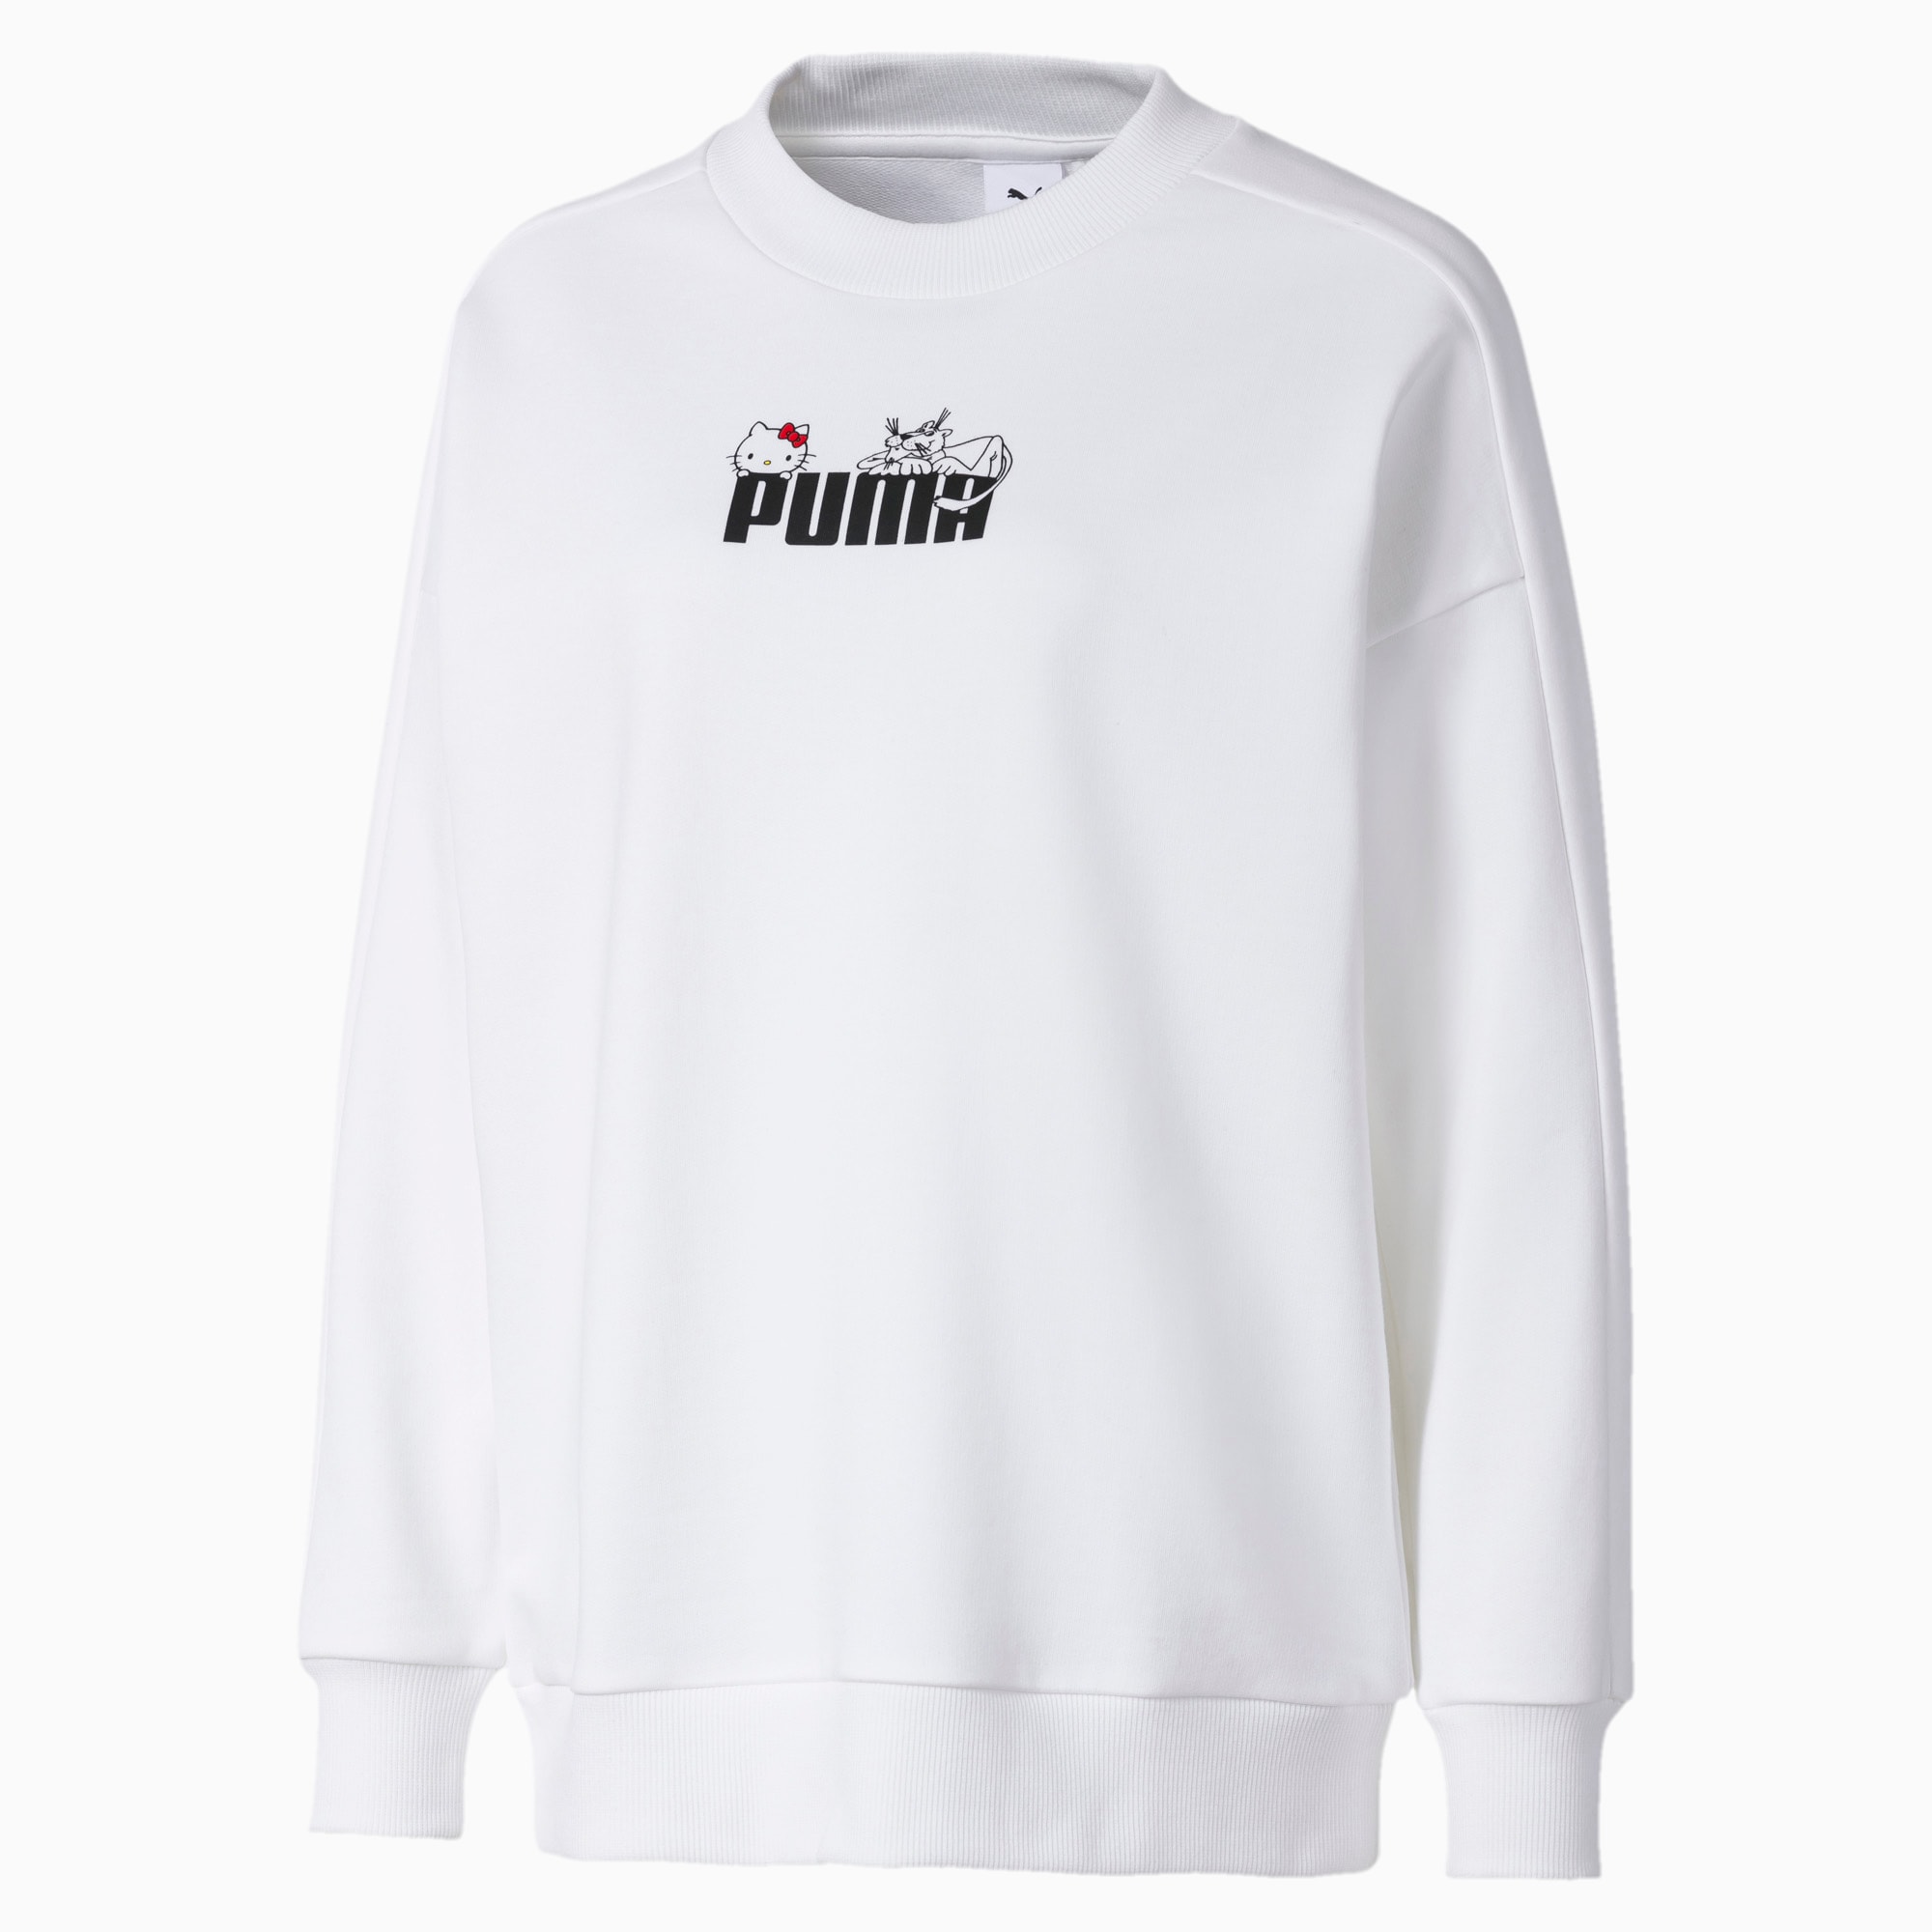 puma womens sweatshirt